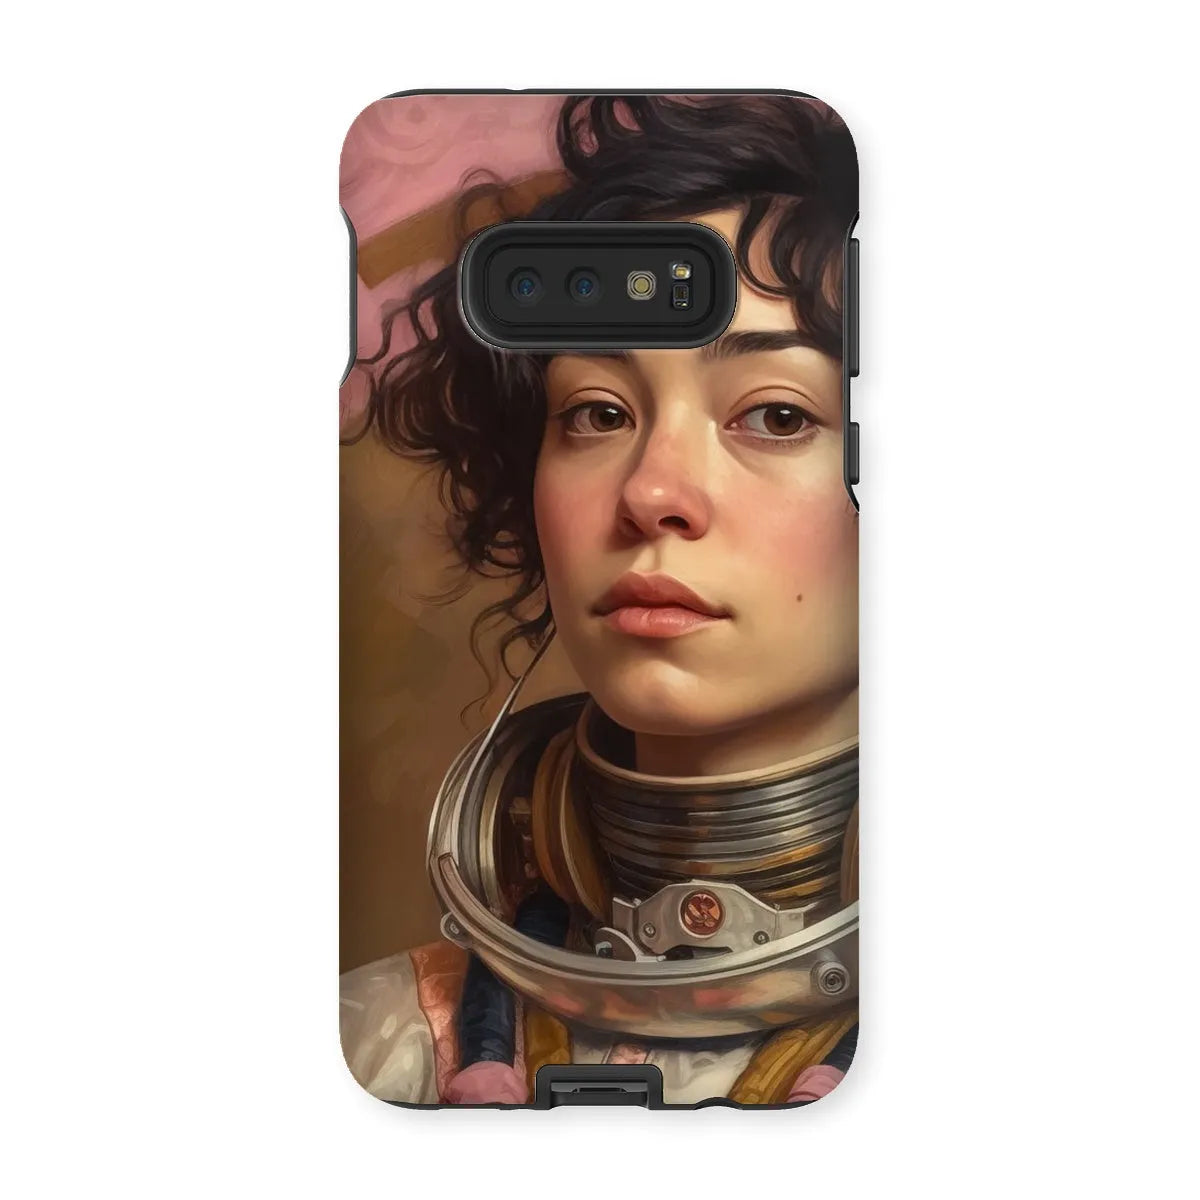 Faustina The Lesbian Astronaut - Lgbtq Art Phone Case - Samsung Galaxy S10e / Matte - Mobile Phone Cases - Aesthetic Art